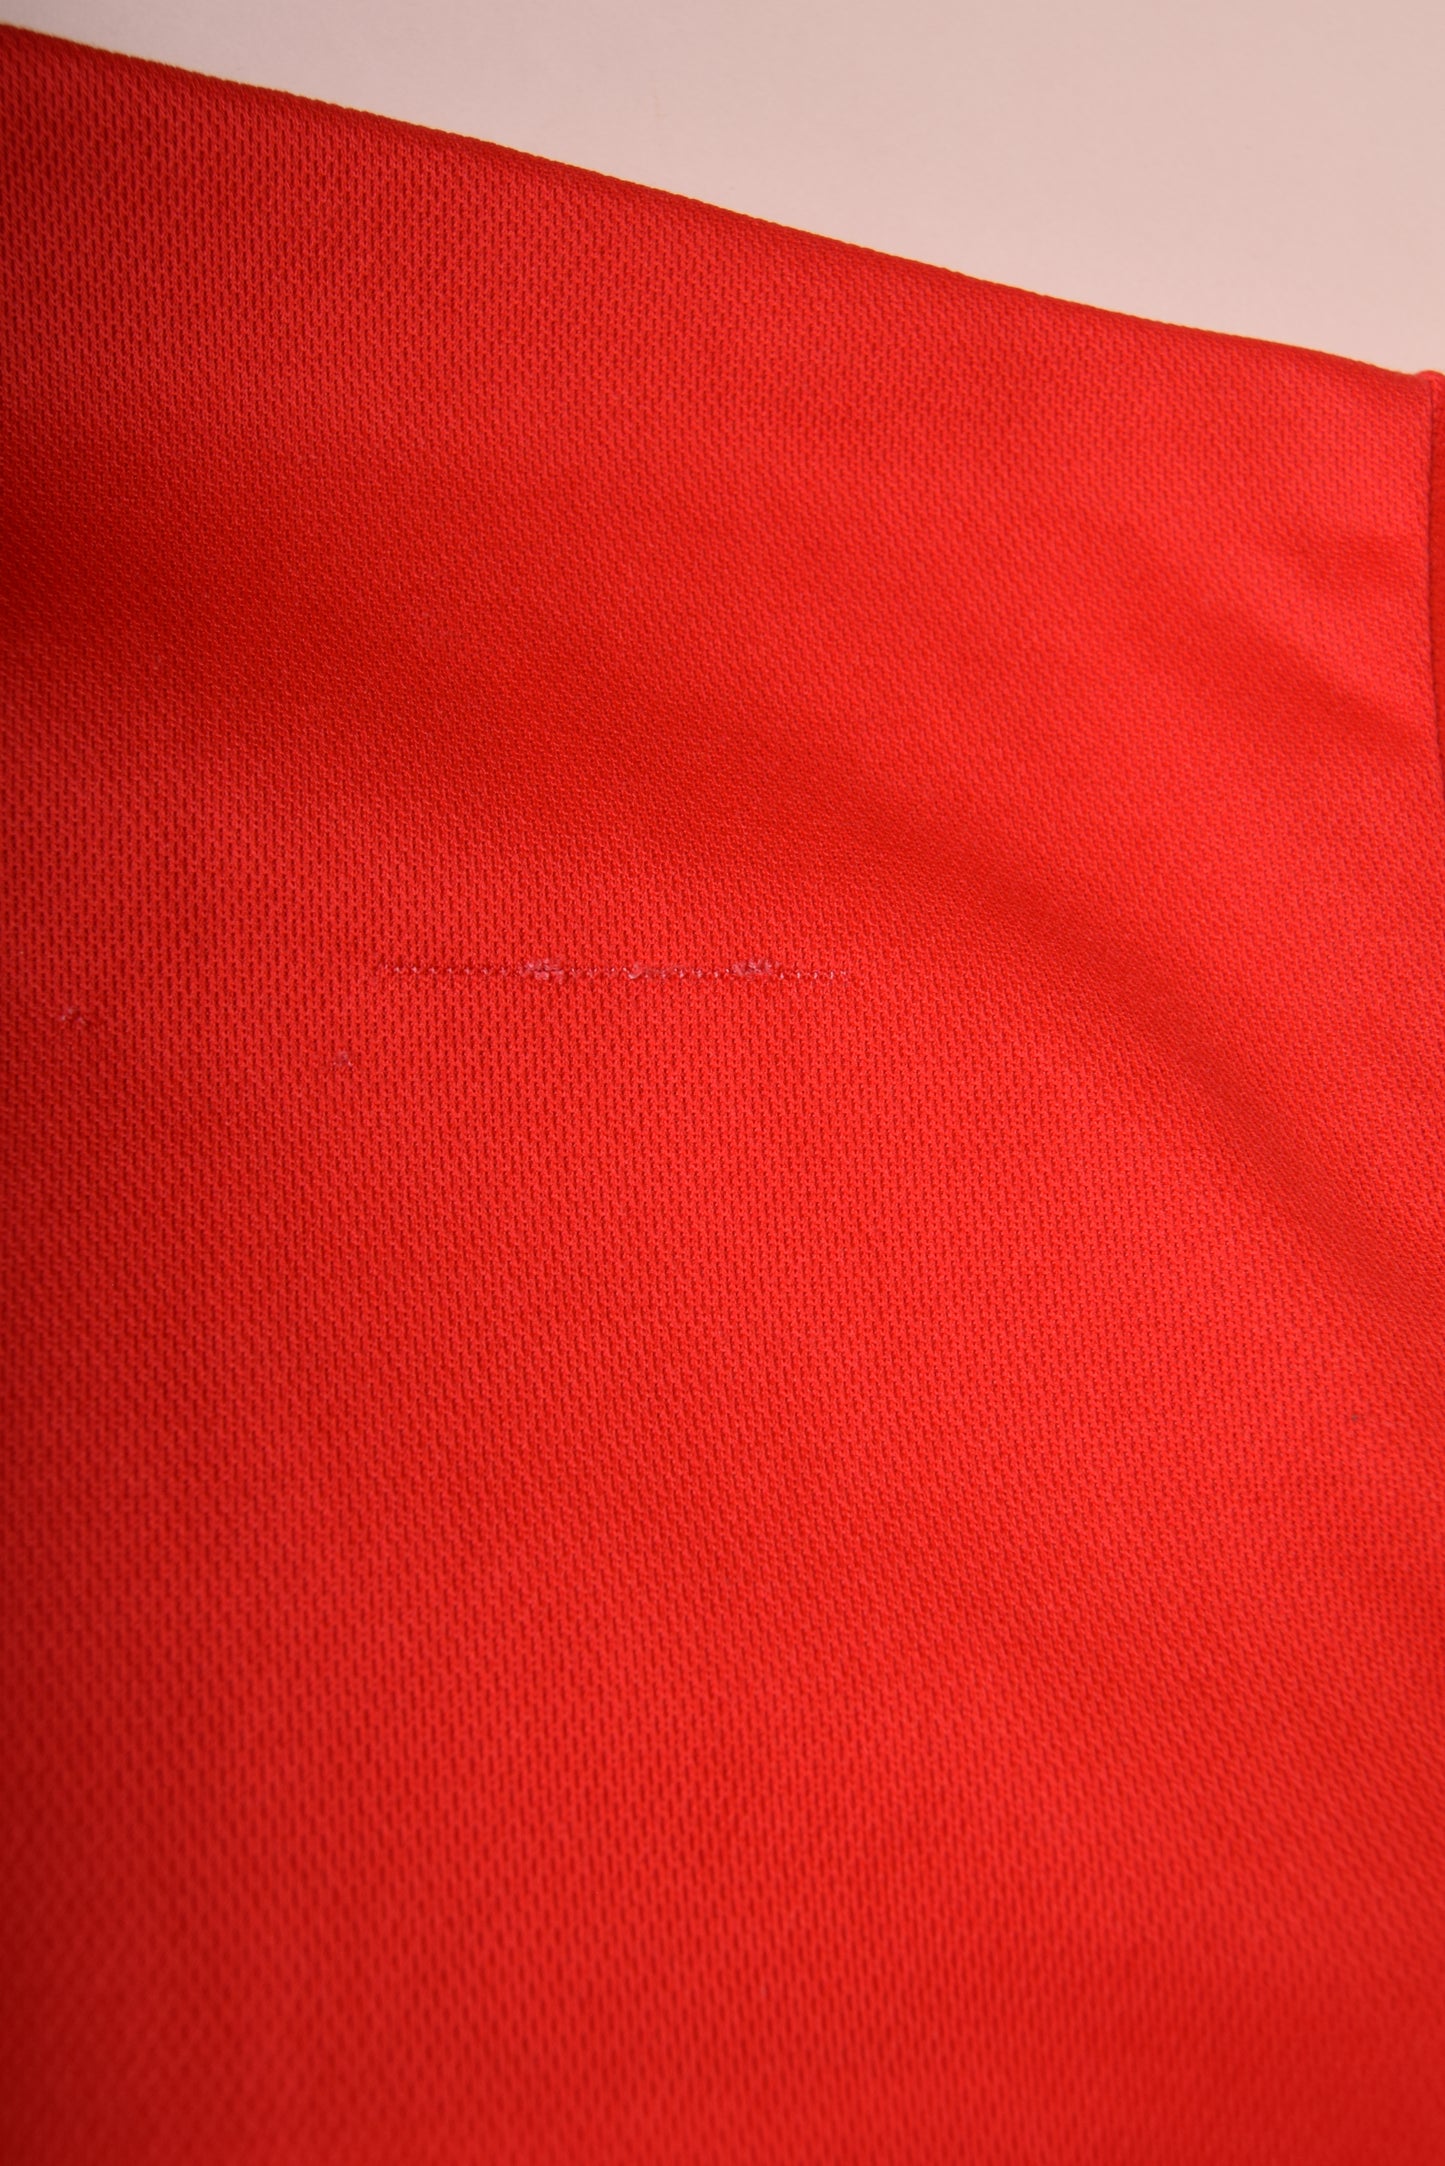 Vintage FC Koln Puma Home Football Shirt '99-'00 Size L